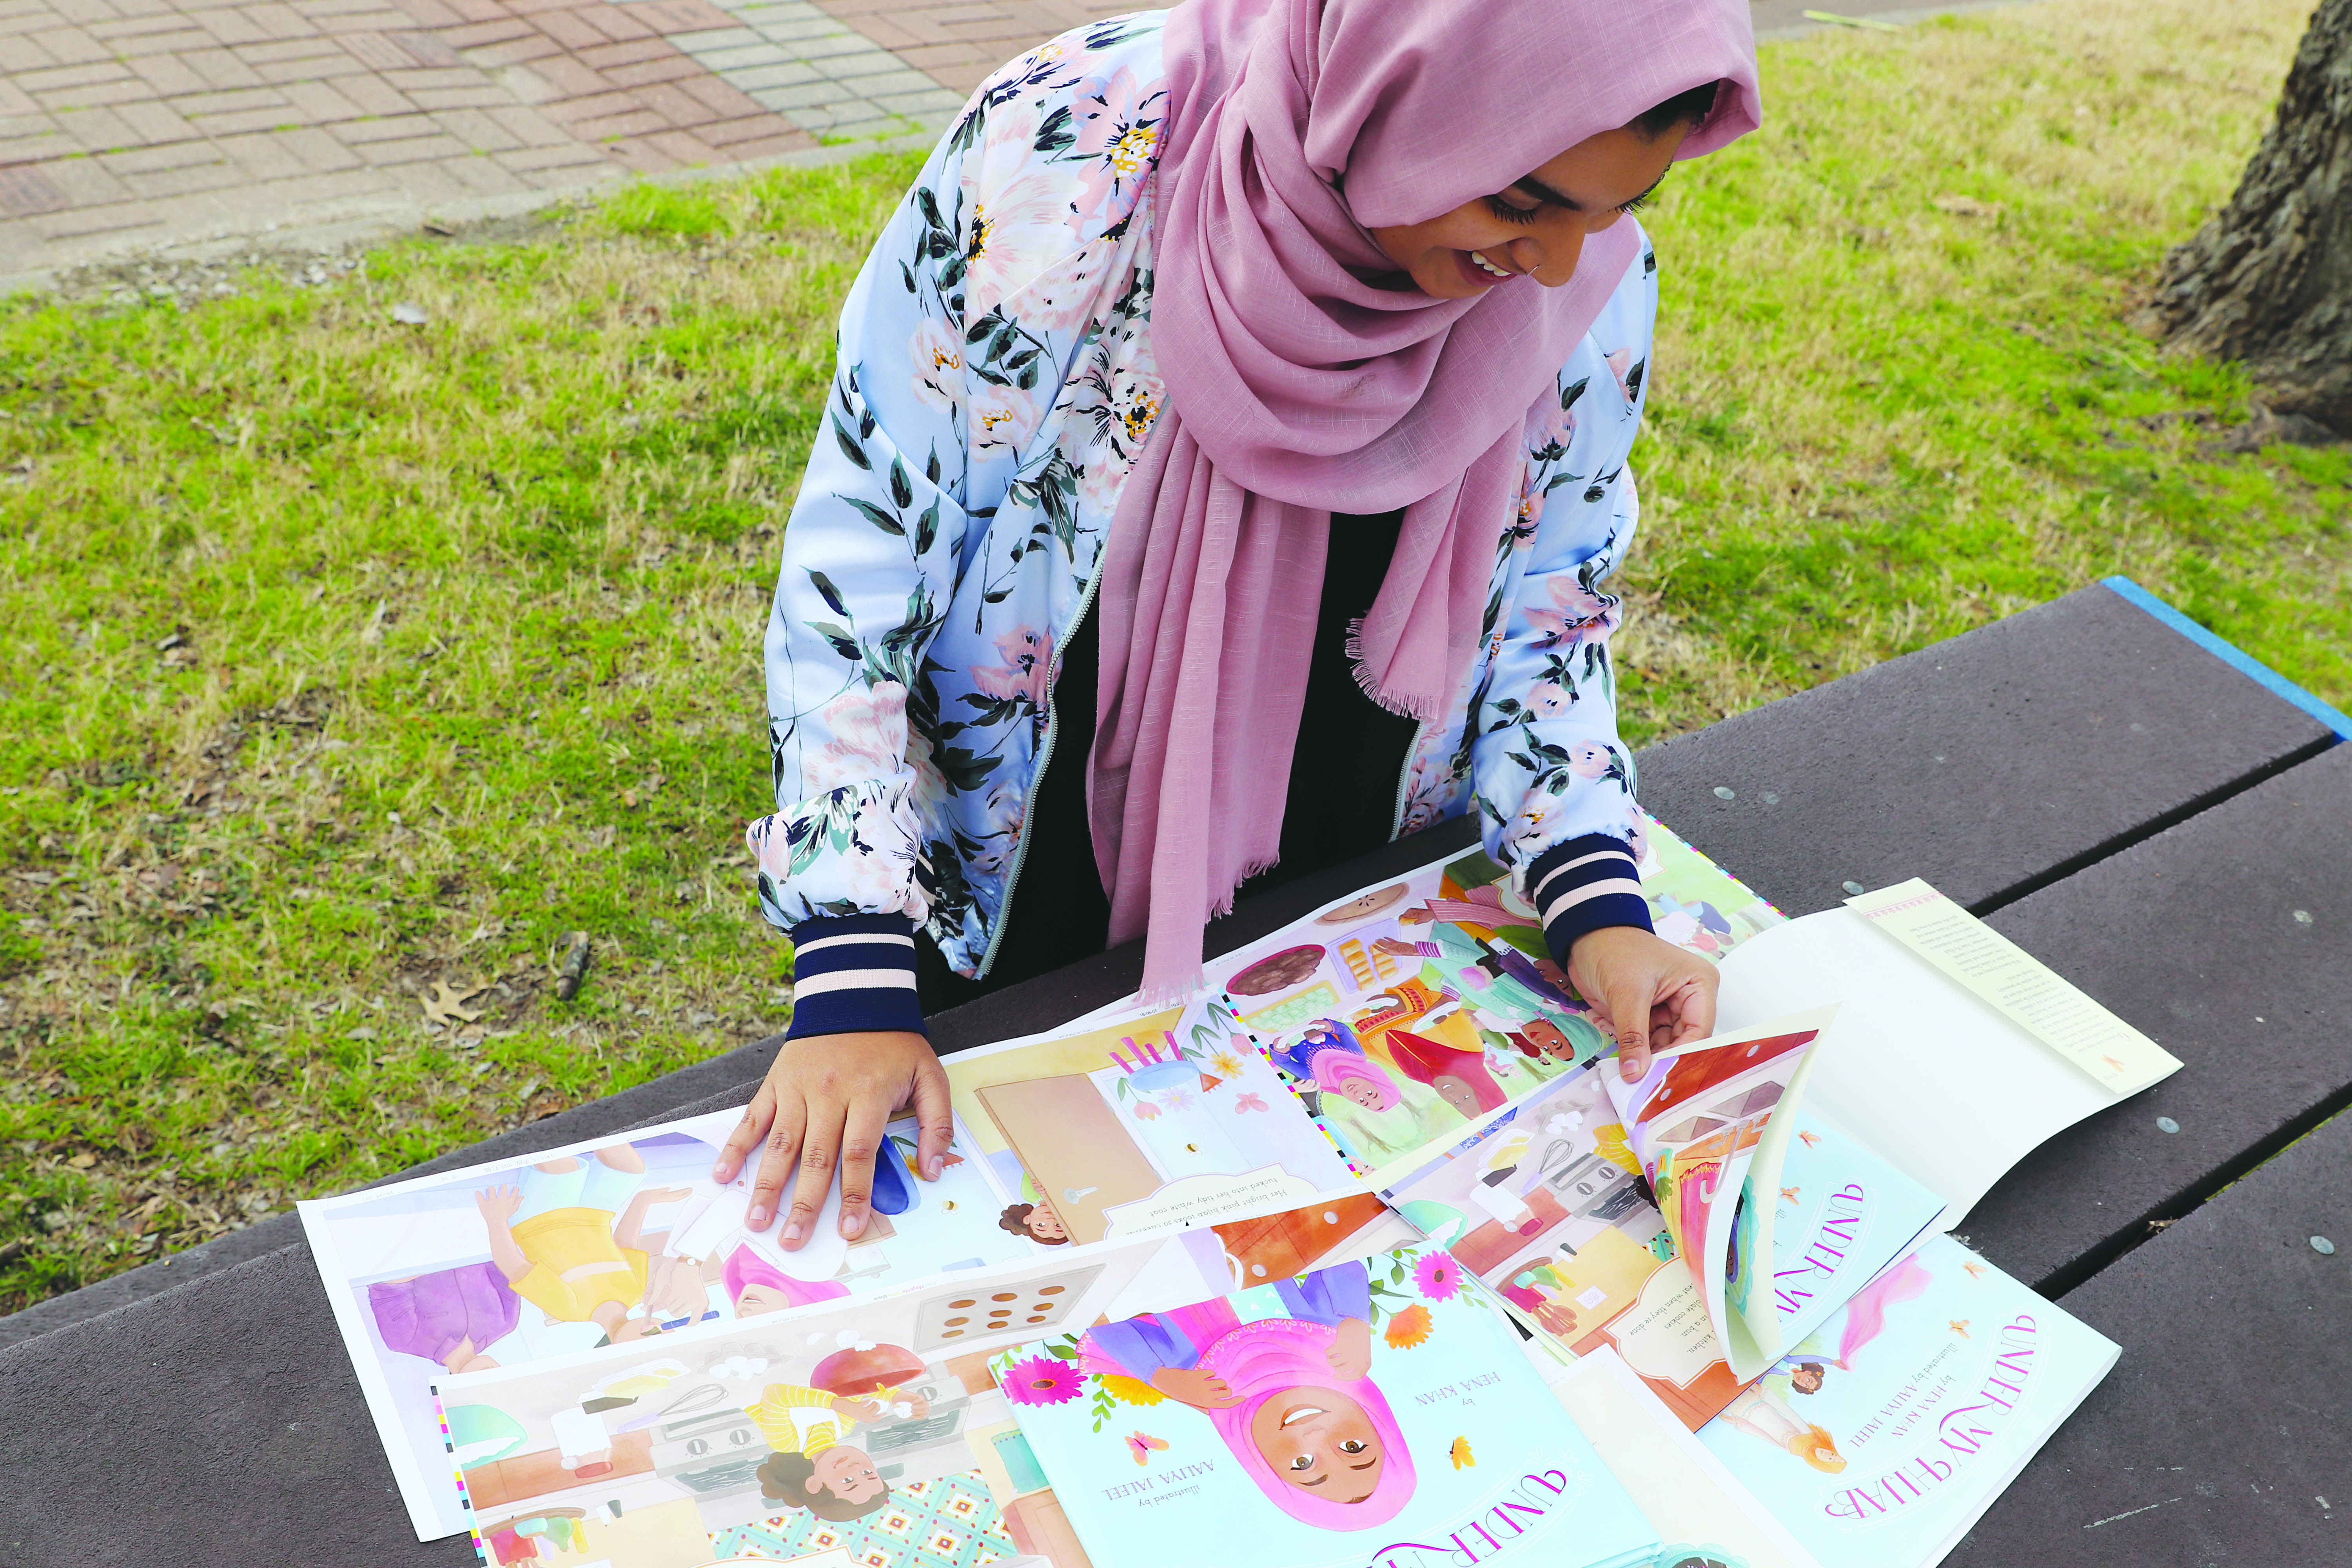 Hijabi student illustrates to inspire